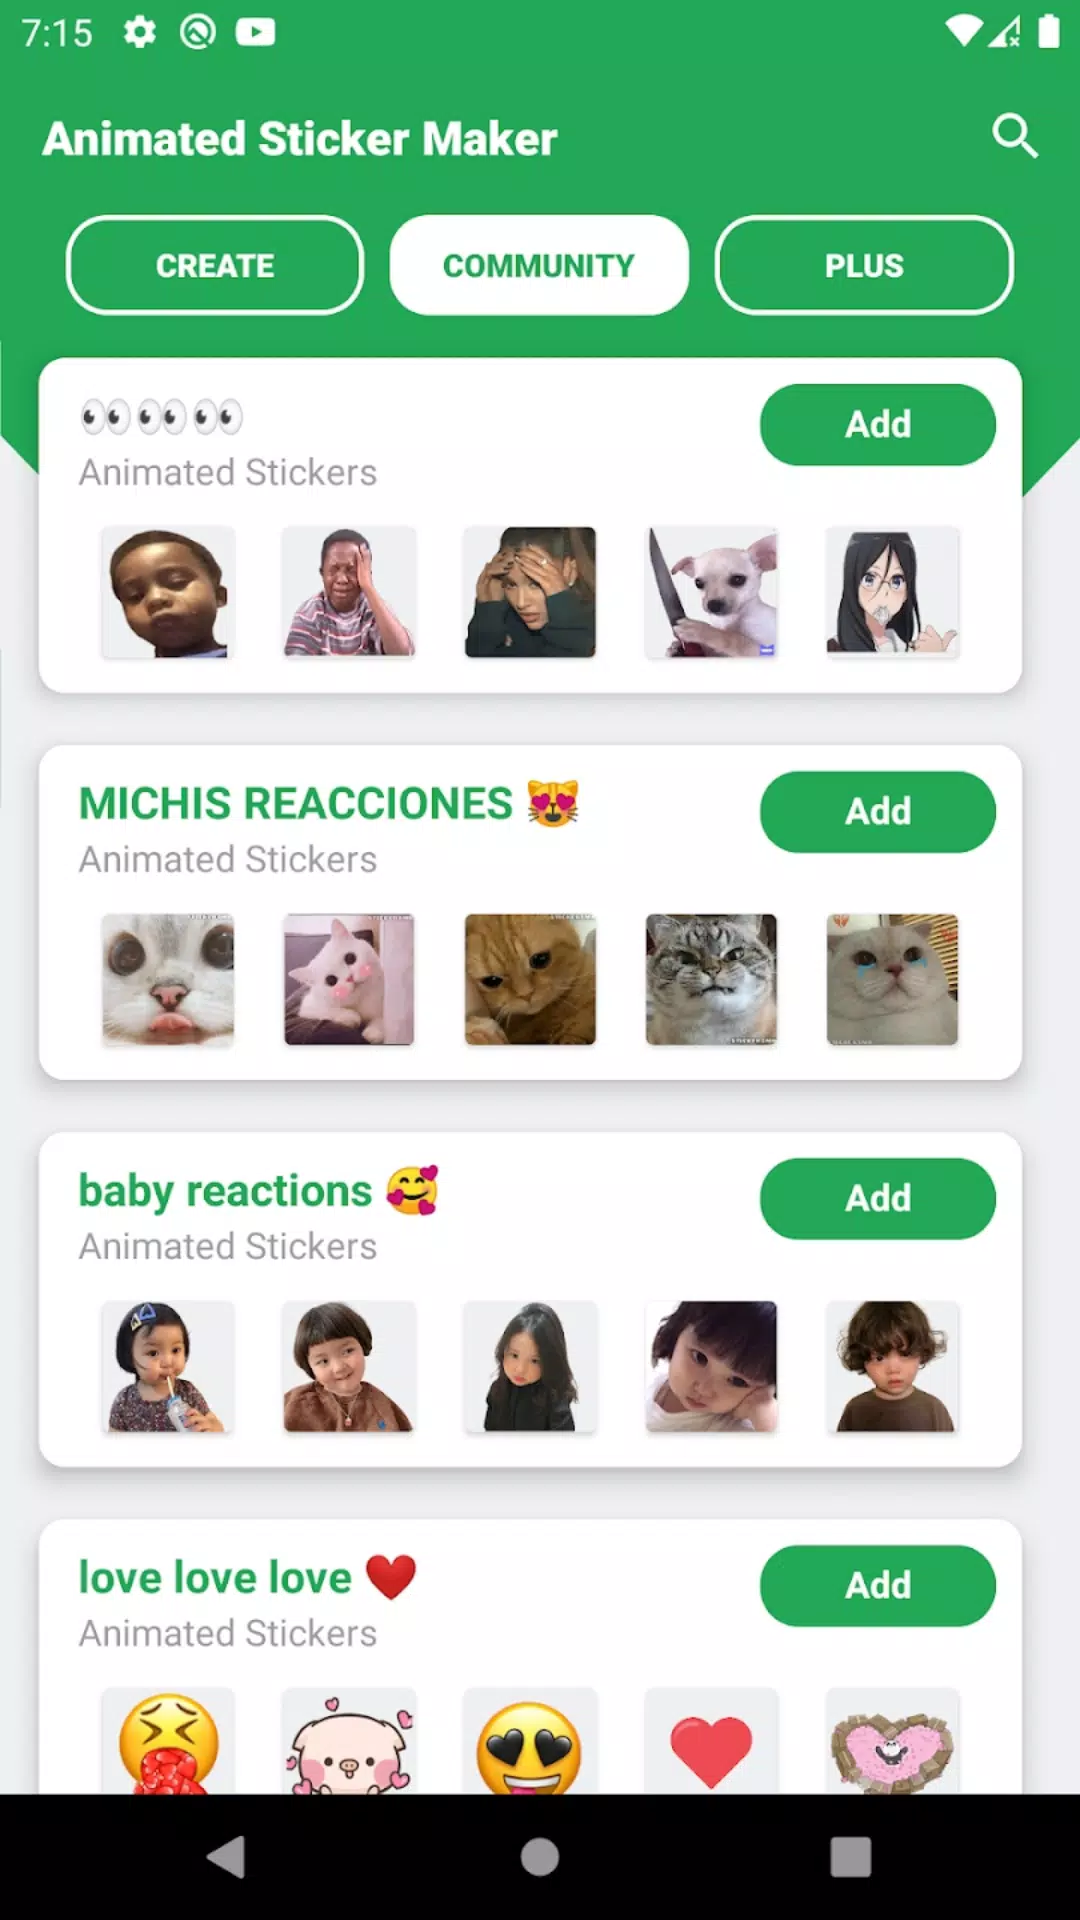 Como criar adesivos GIF para WhatsApp de forma simples